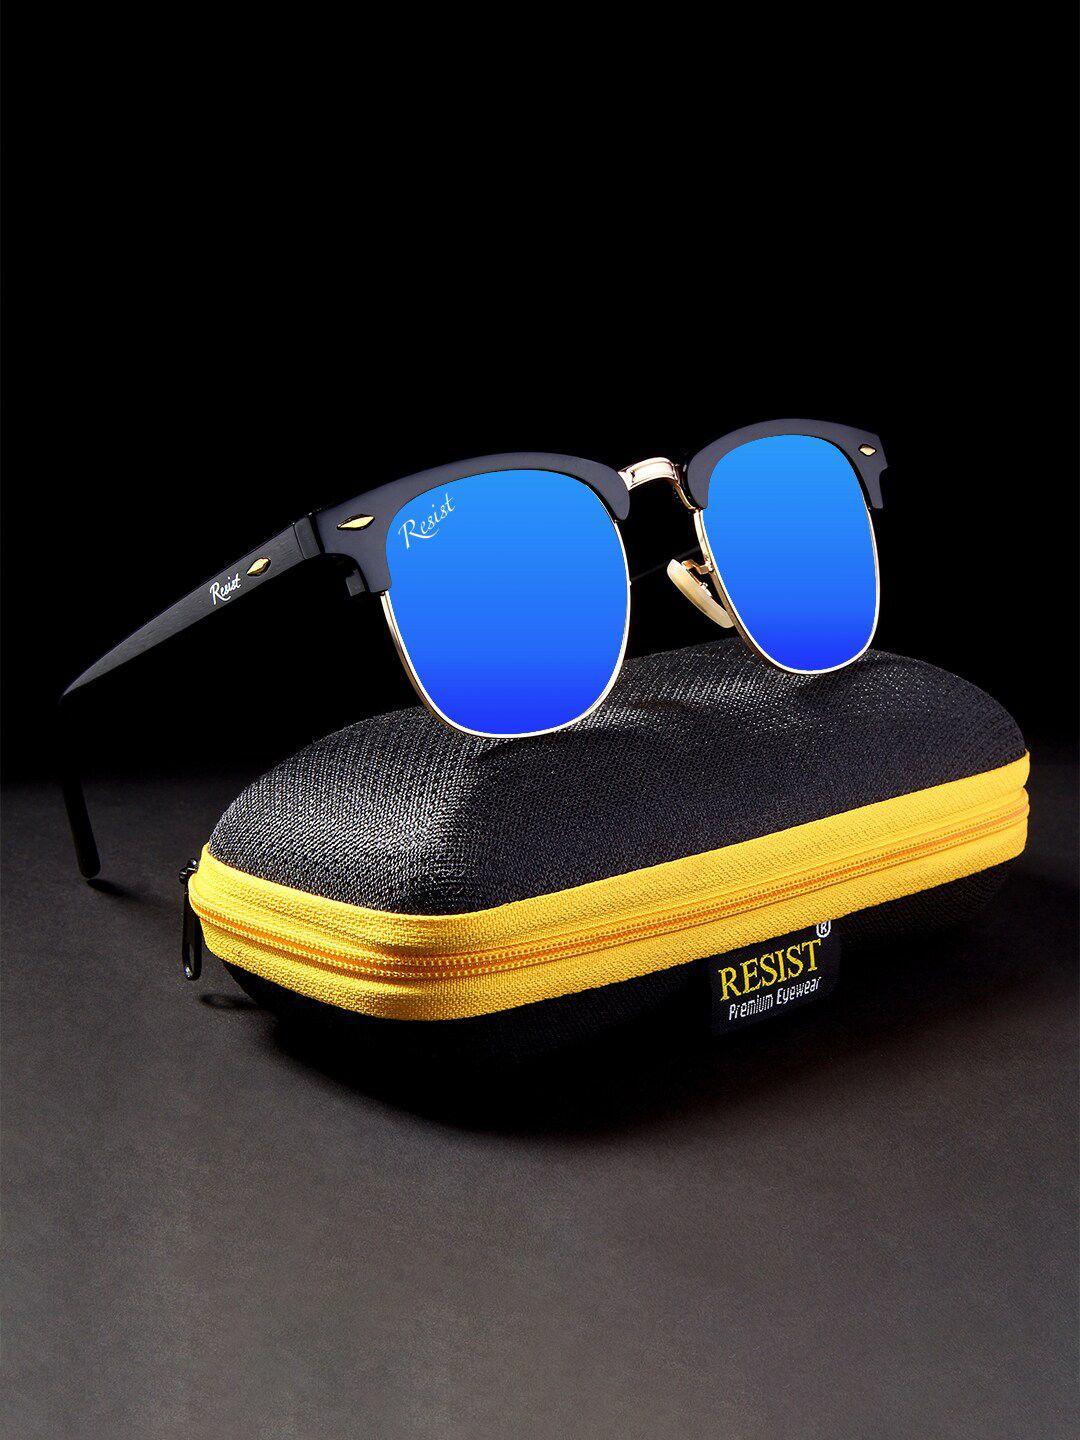 resist eyewear full rim browline sunglasses with uv protected lens rochgoldbluerevo